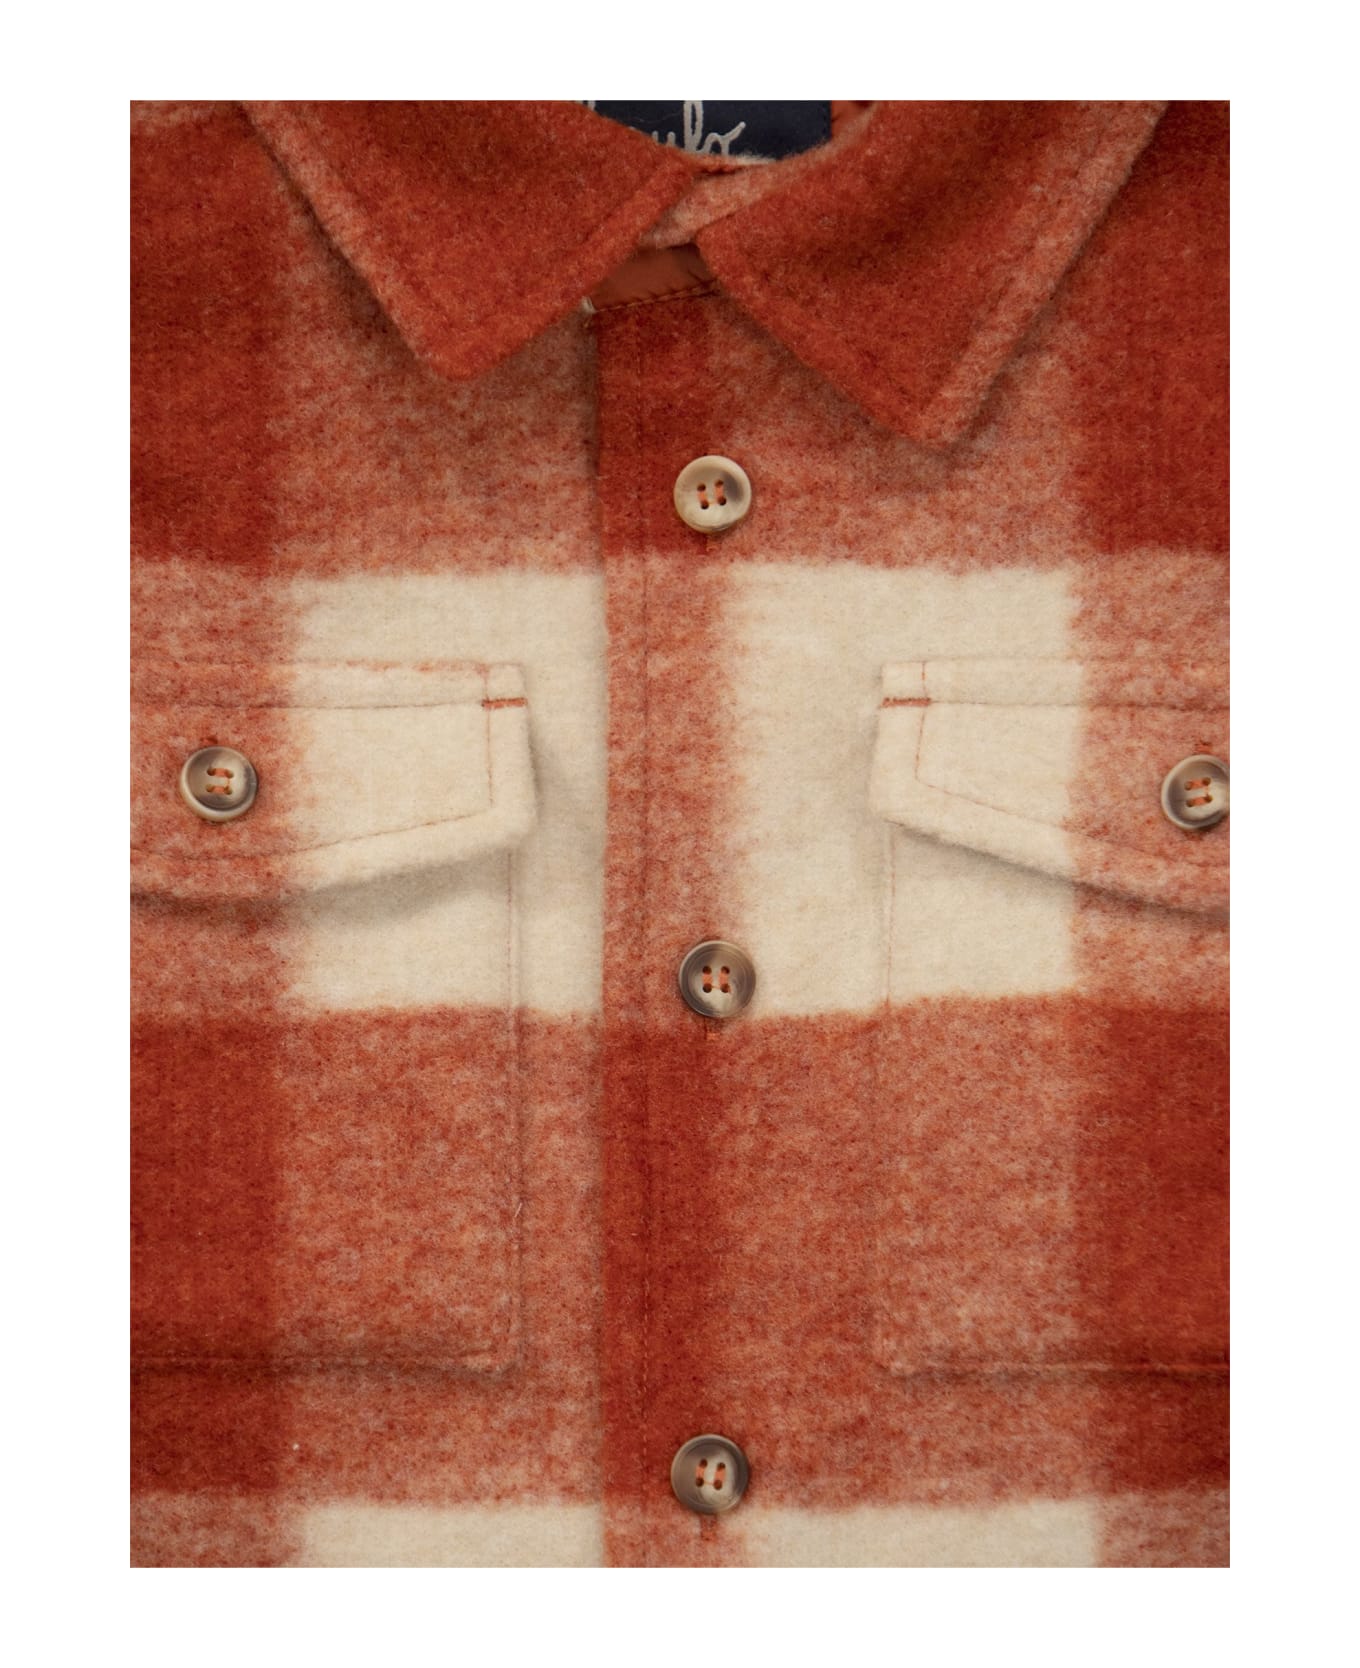 Il Gufo Damier Pattern Shirt Jacket - Copper